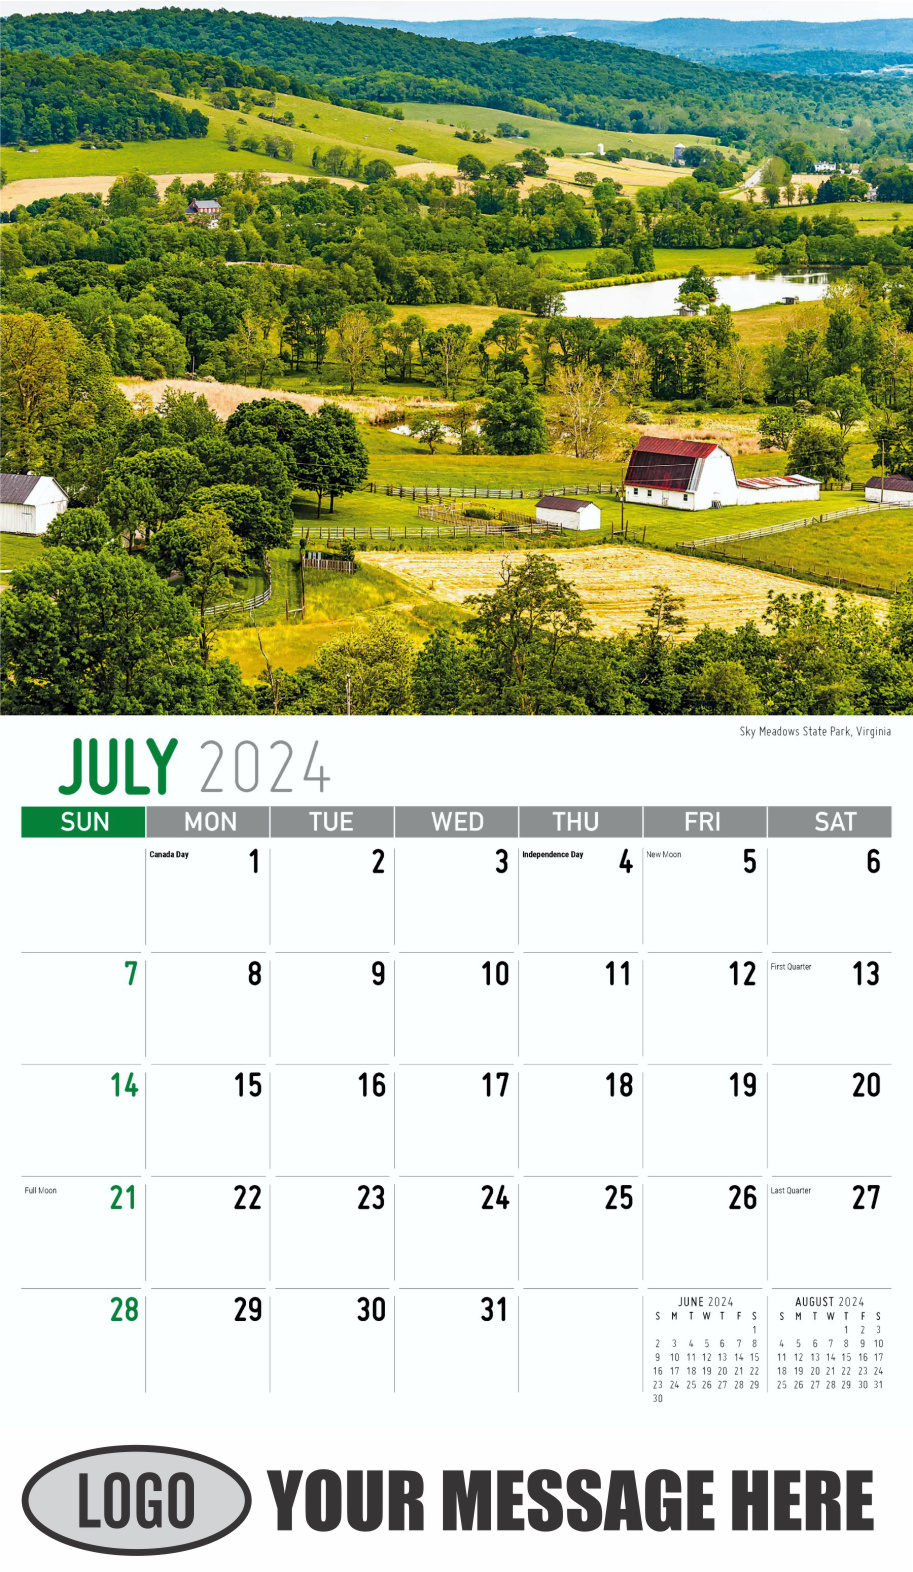 Scenes of Southeast USA 2024 Business Promo Wall Calendar - July